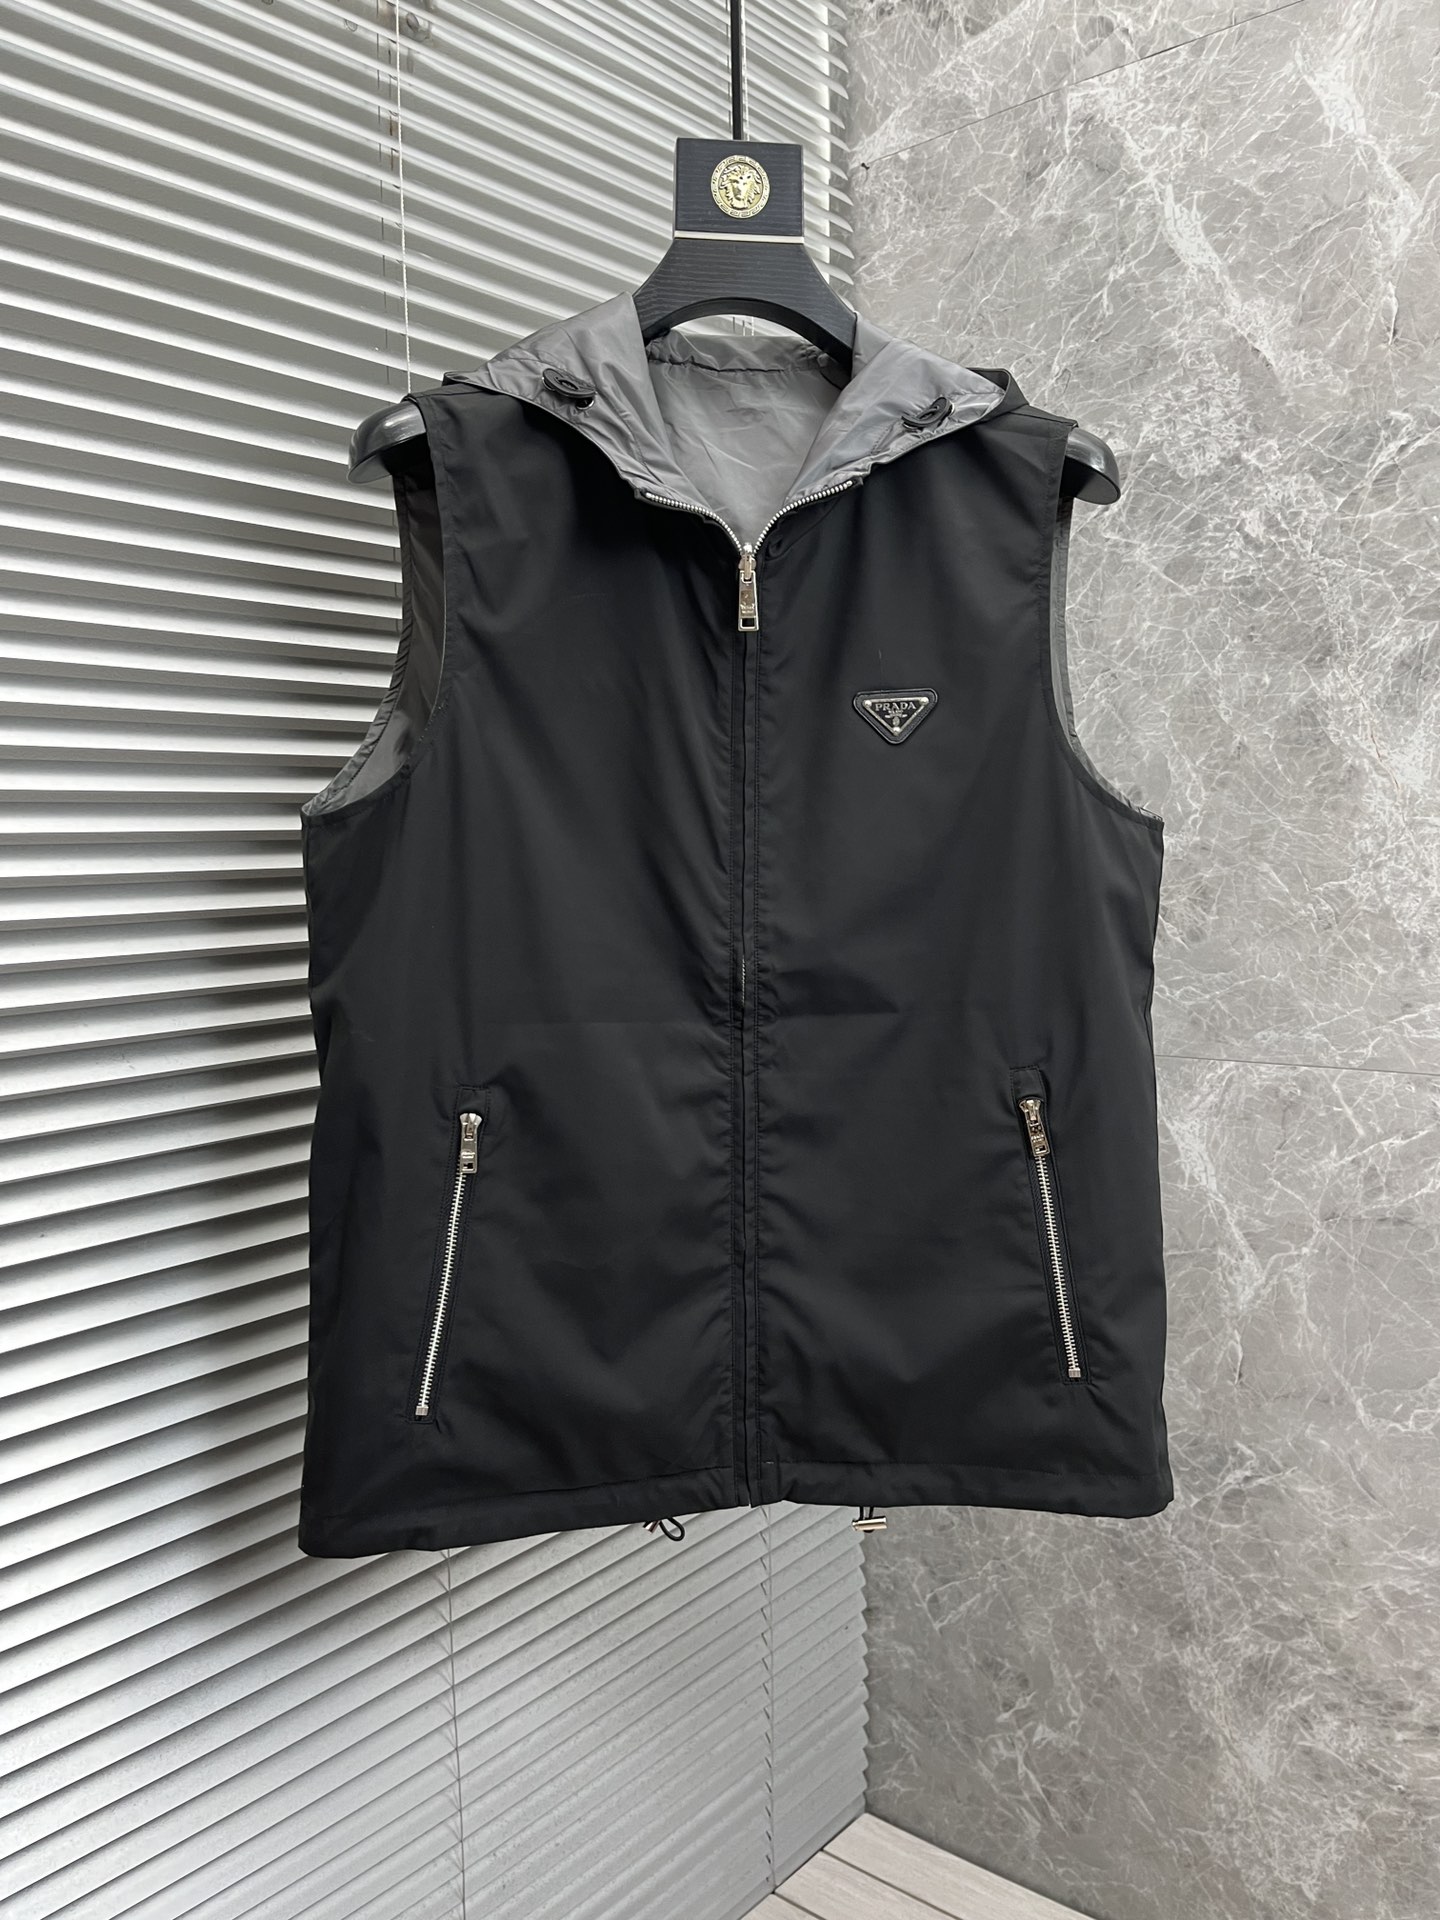 Prada Clothing Coats & Jackets Waistcoat Black Fall Collection Fashion Hooded Top